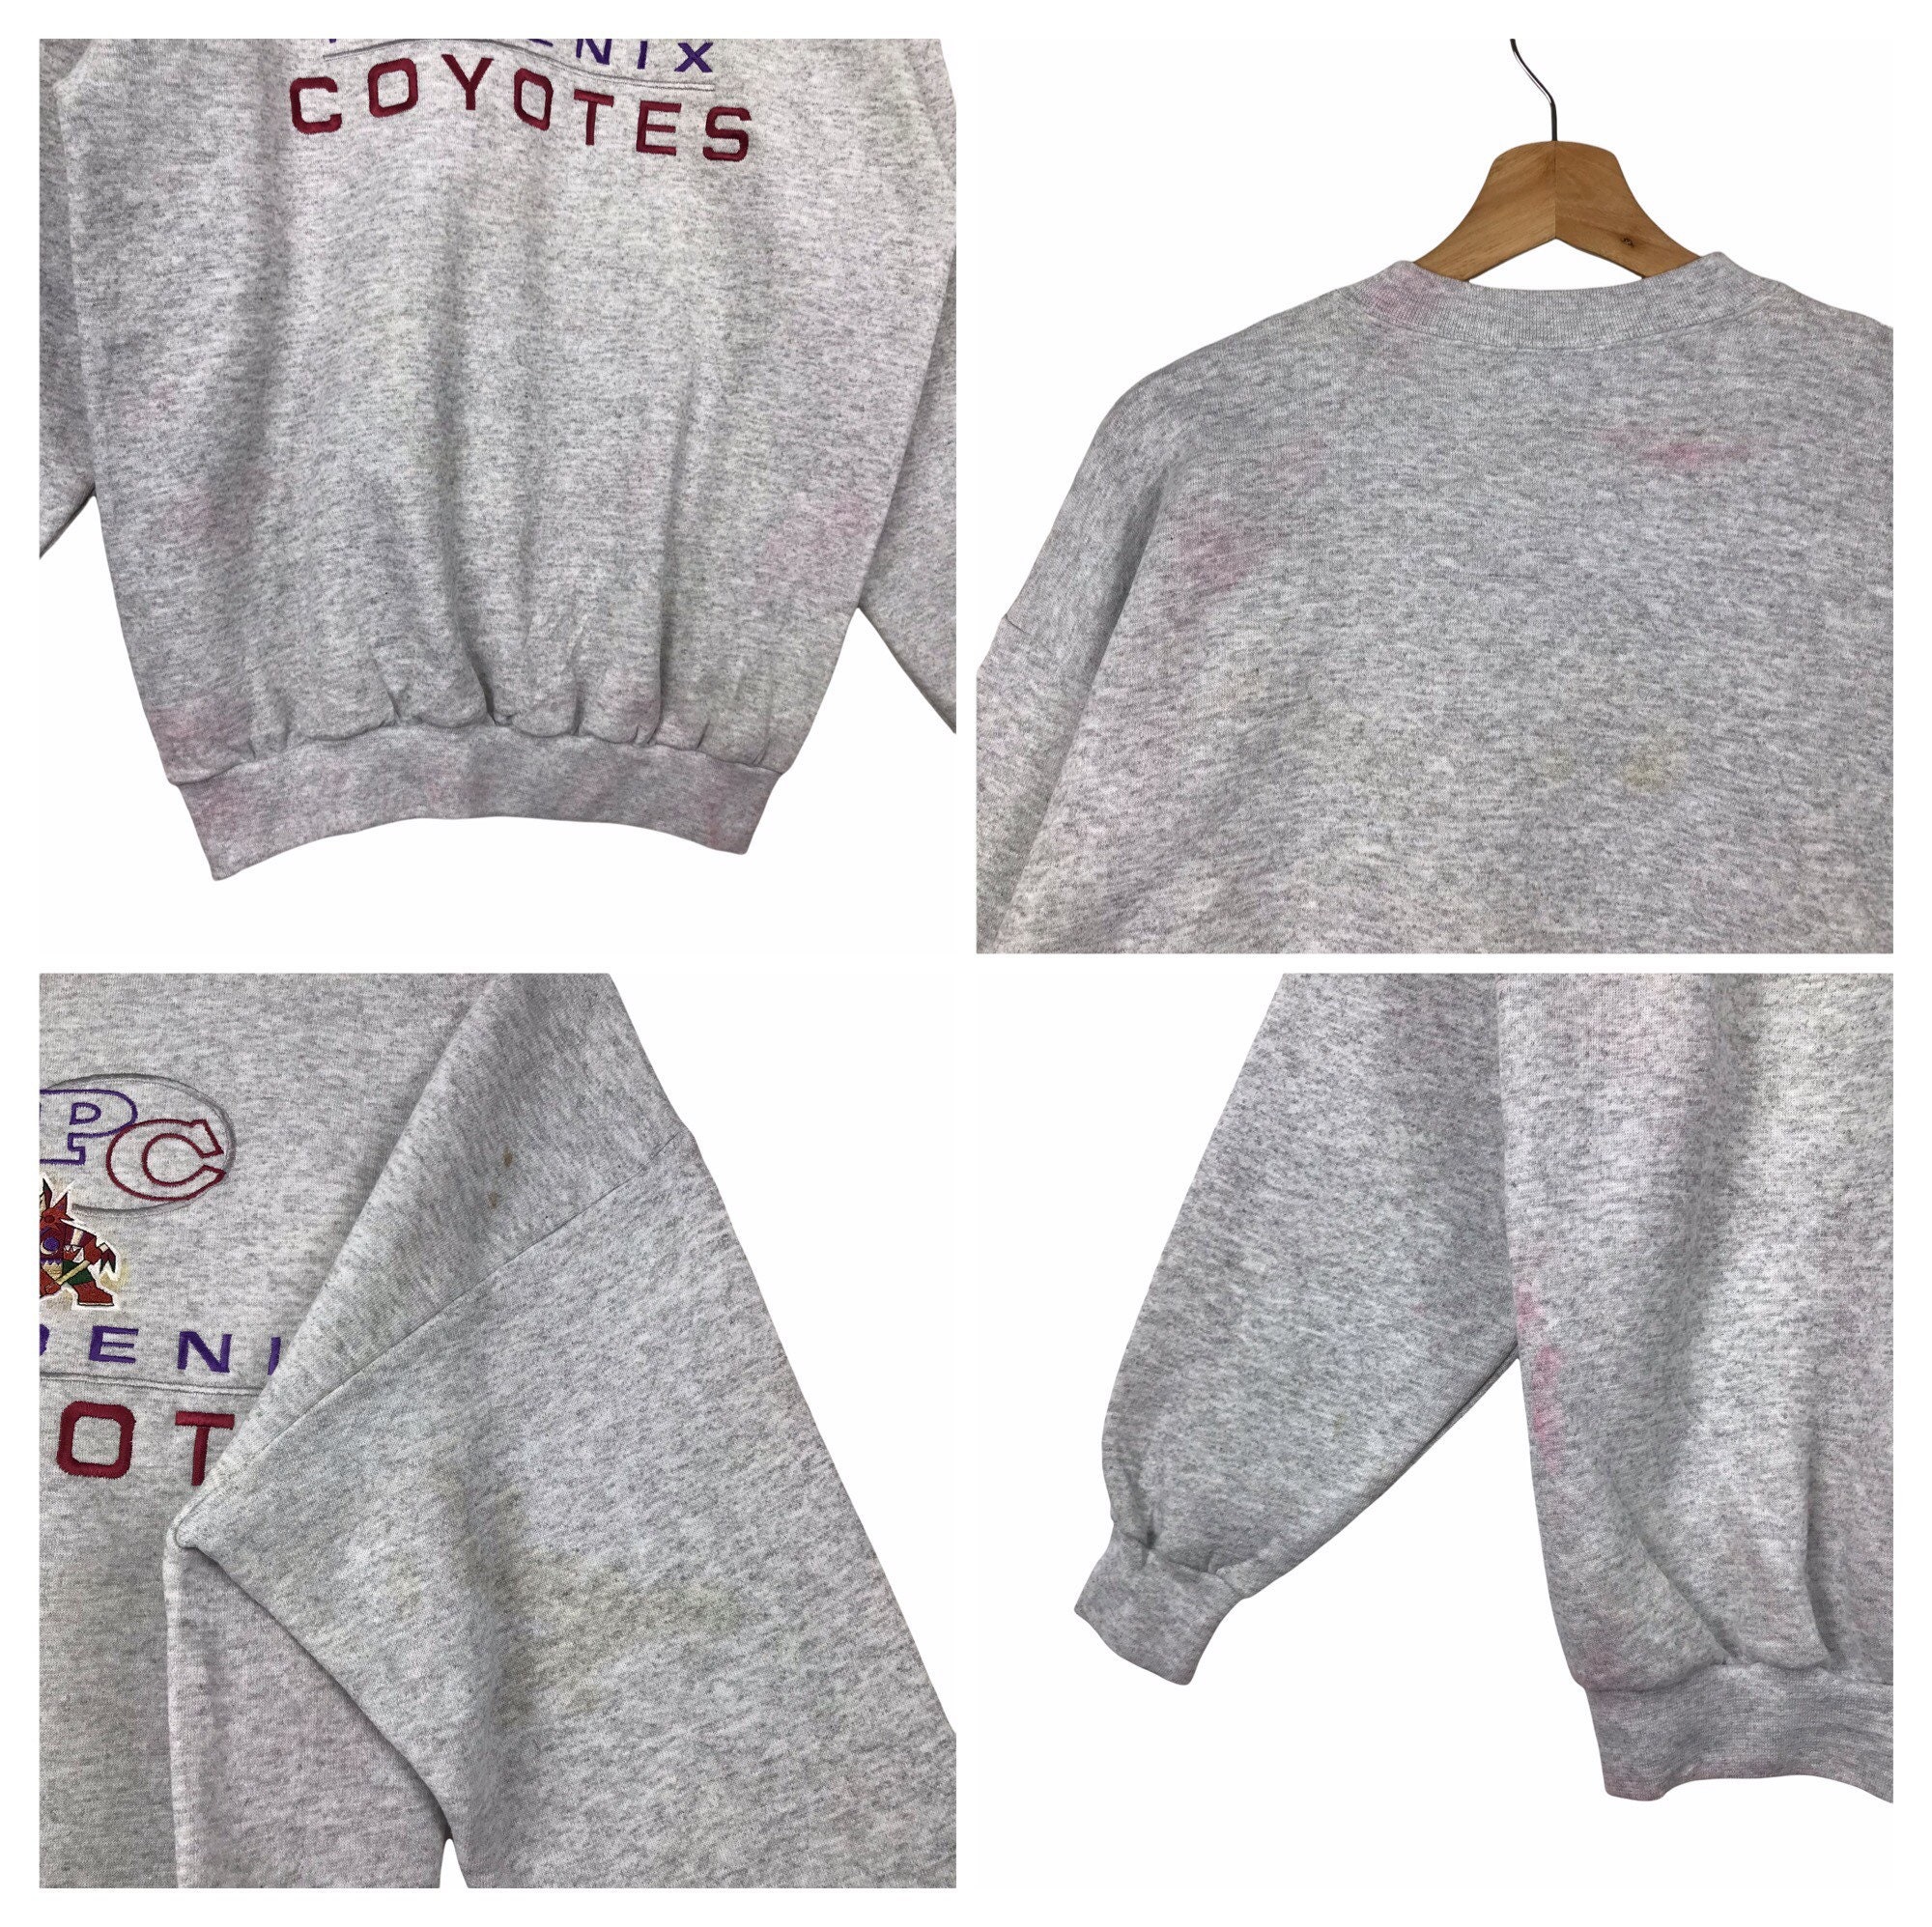 Arizona Coyotes Champion Vintage Ice Crewneck Sweatshirt